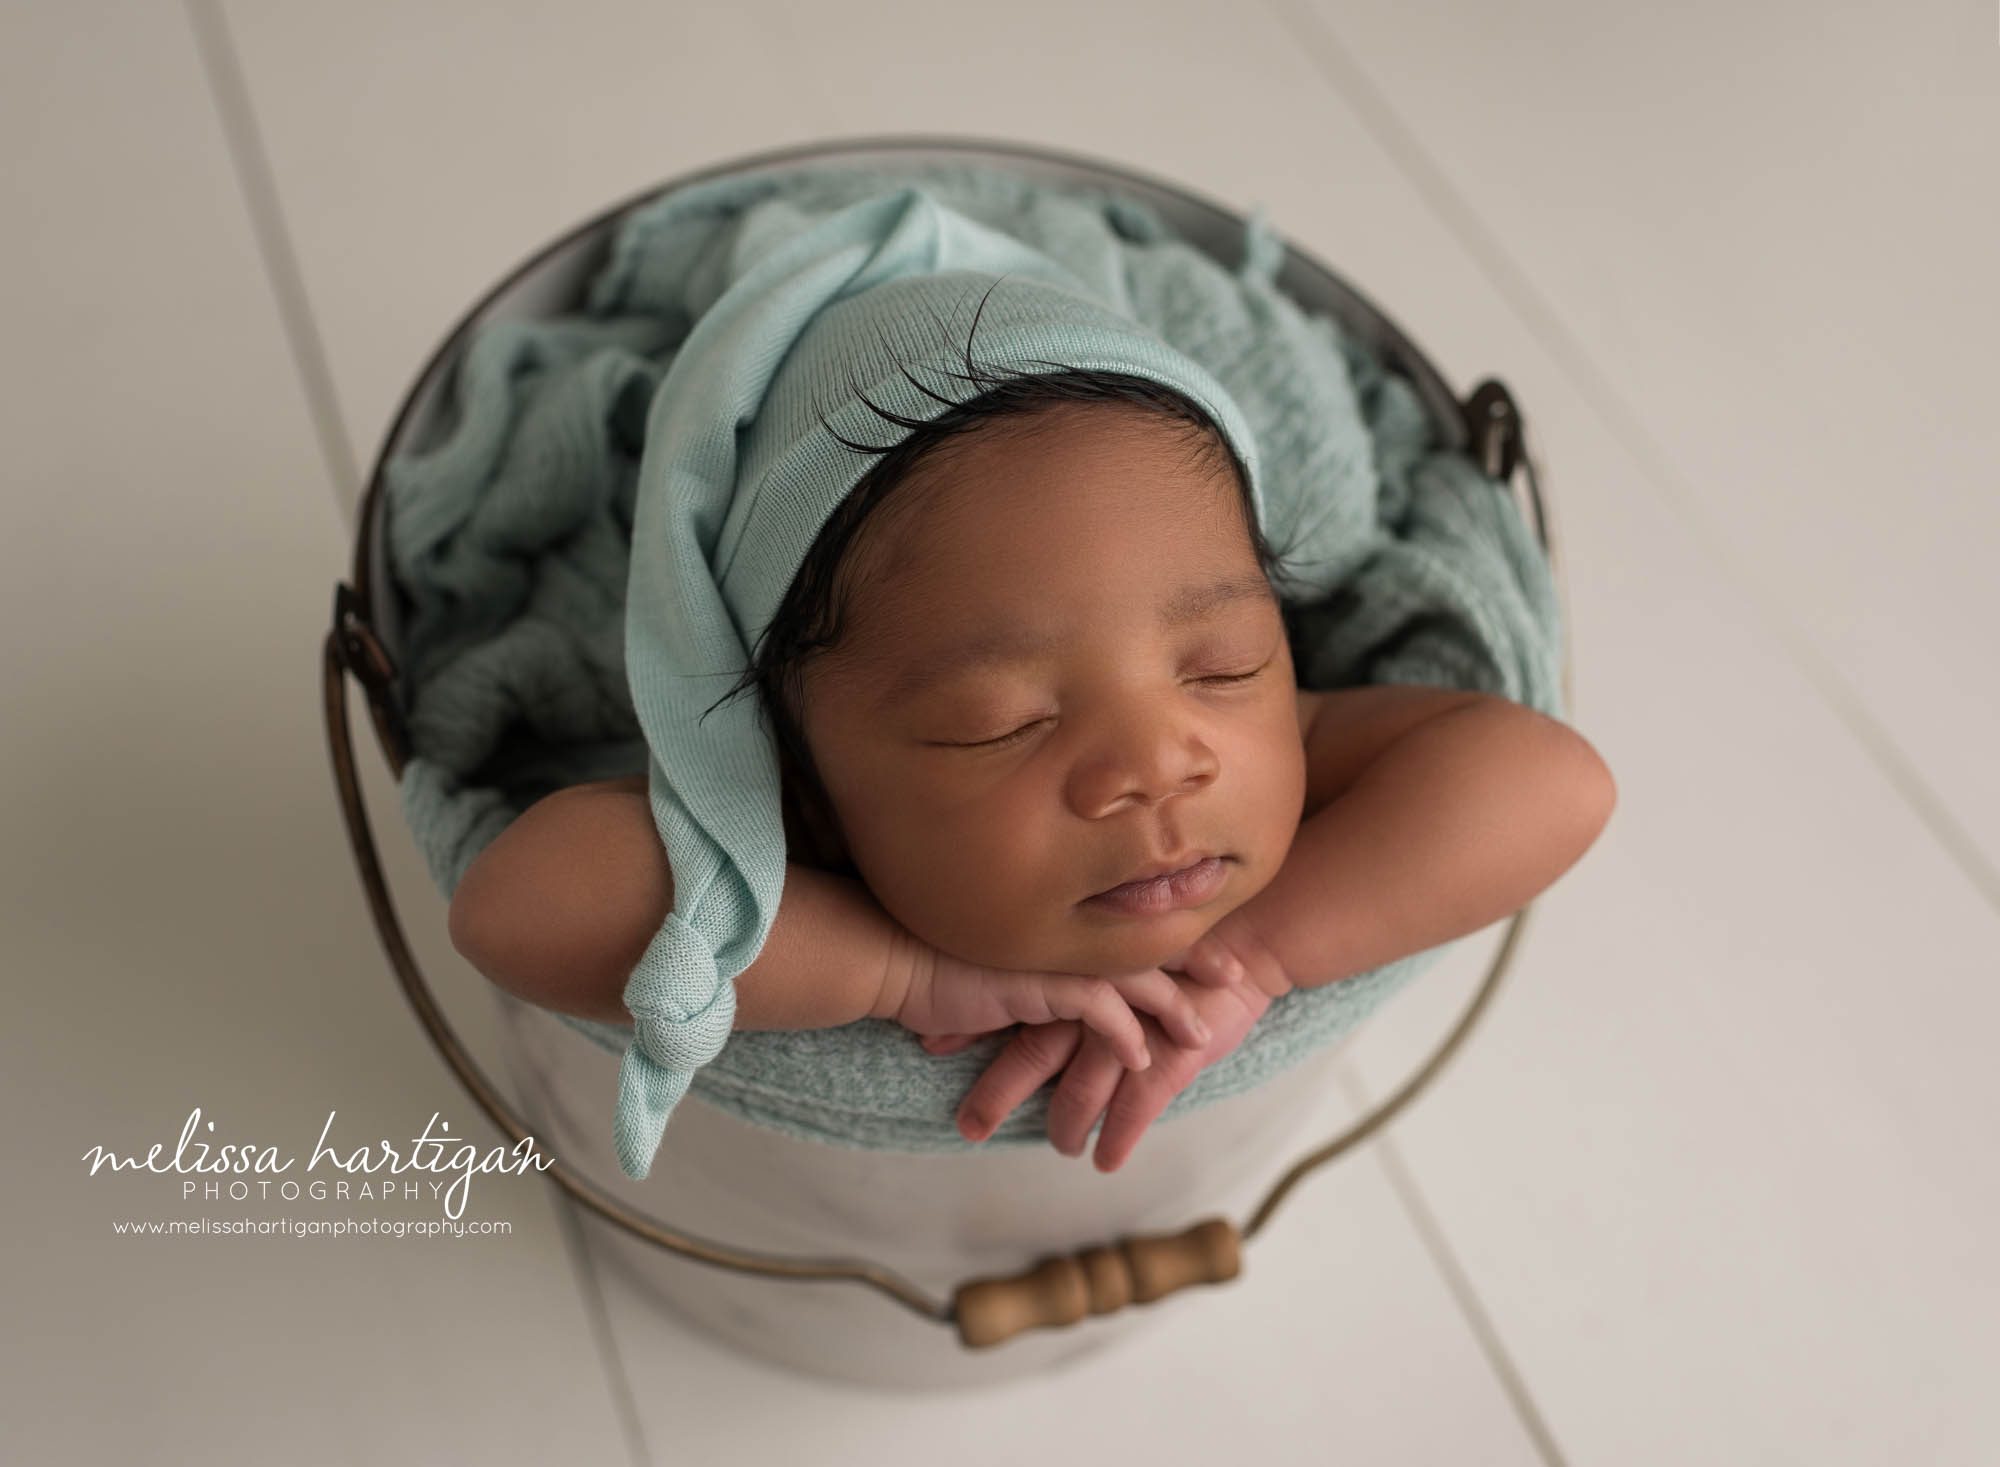 newborn baby posed in bucket wearing soft green sleepy cap